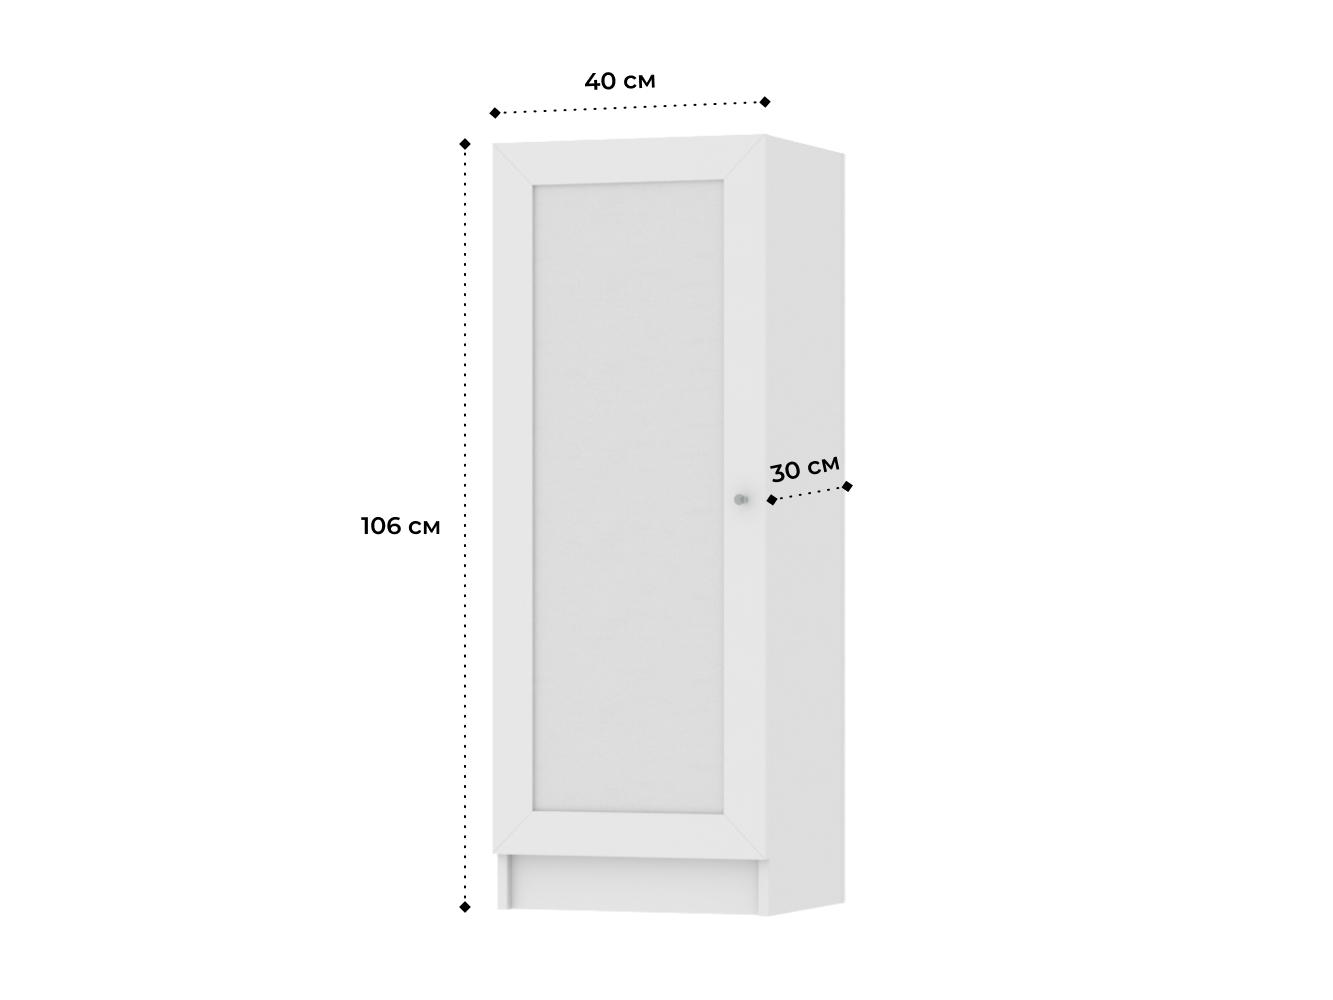 Изображение товара Комод Билли 212 white ИКЕА (IKEA), 40x30x106 см на сайте adeta.ru